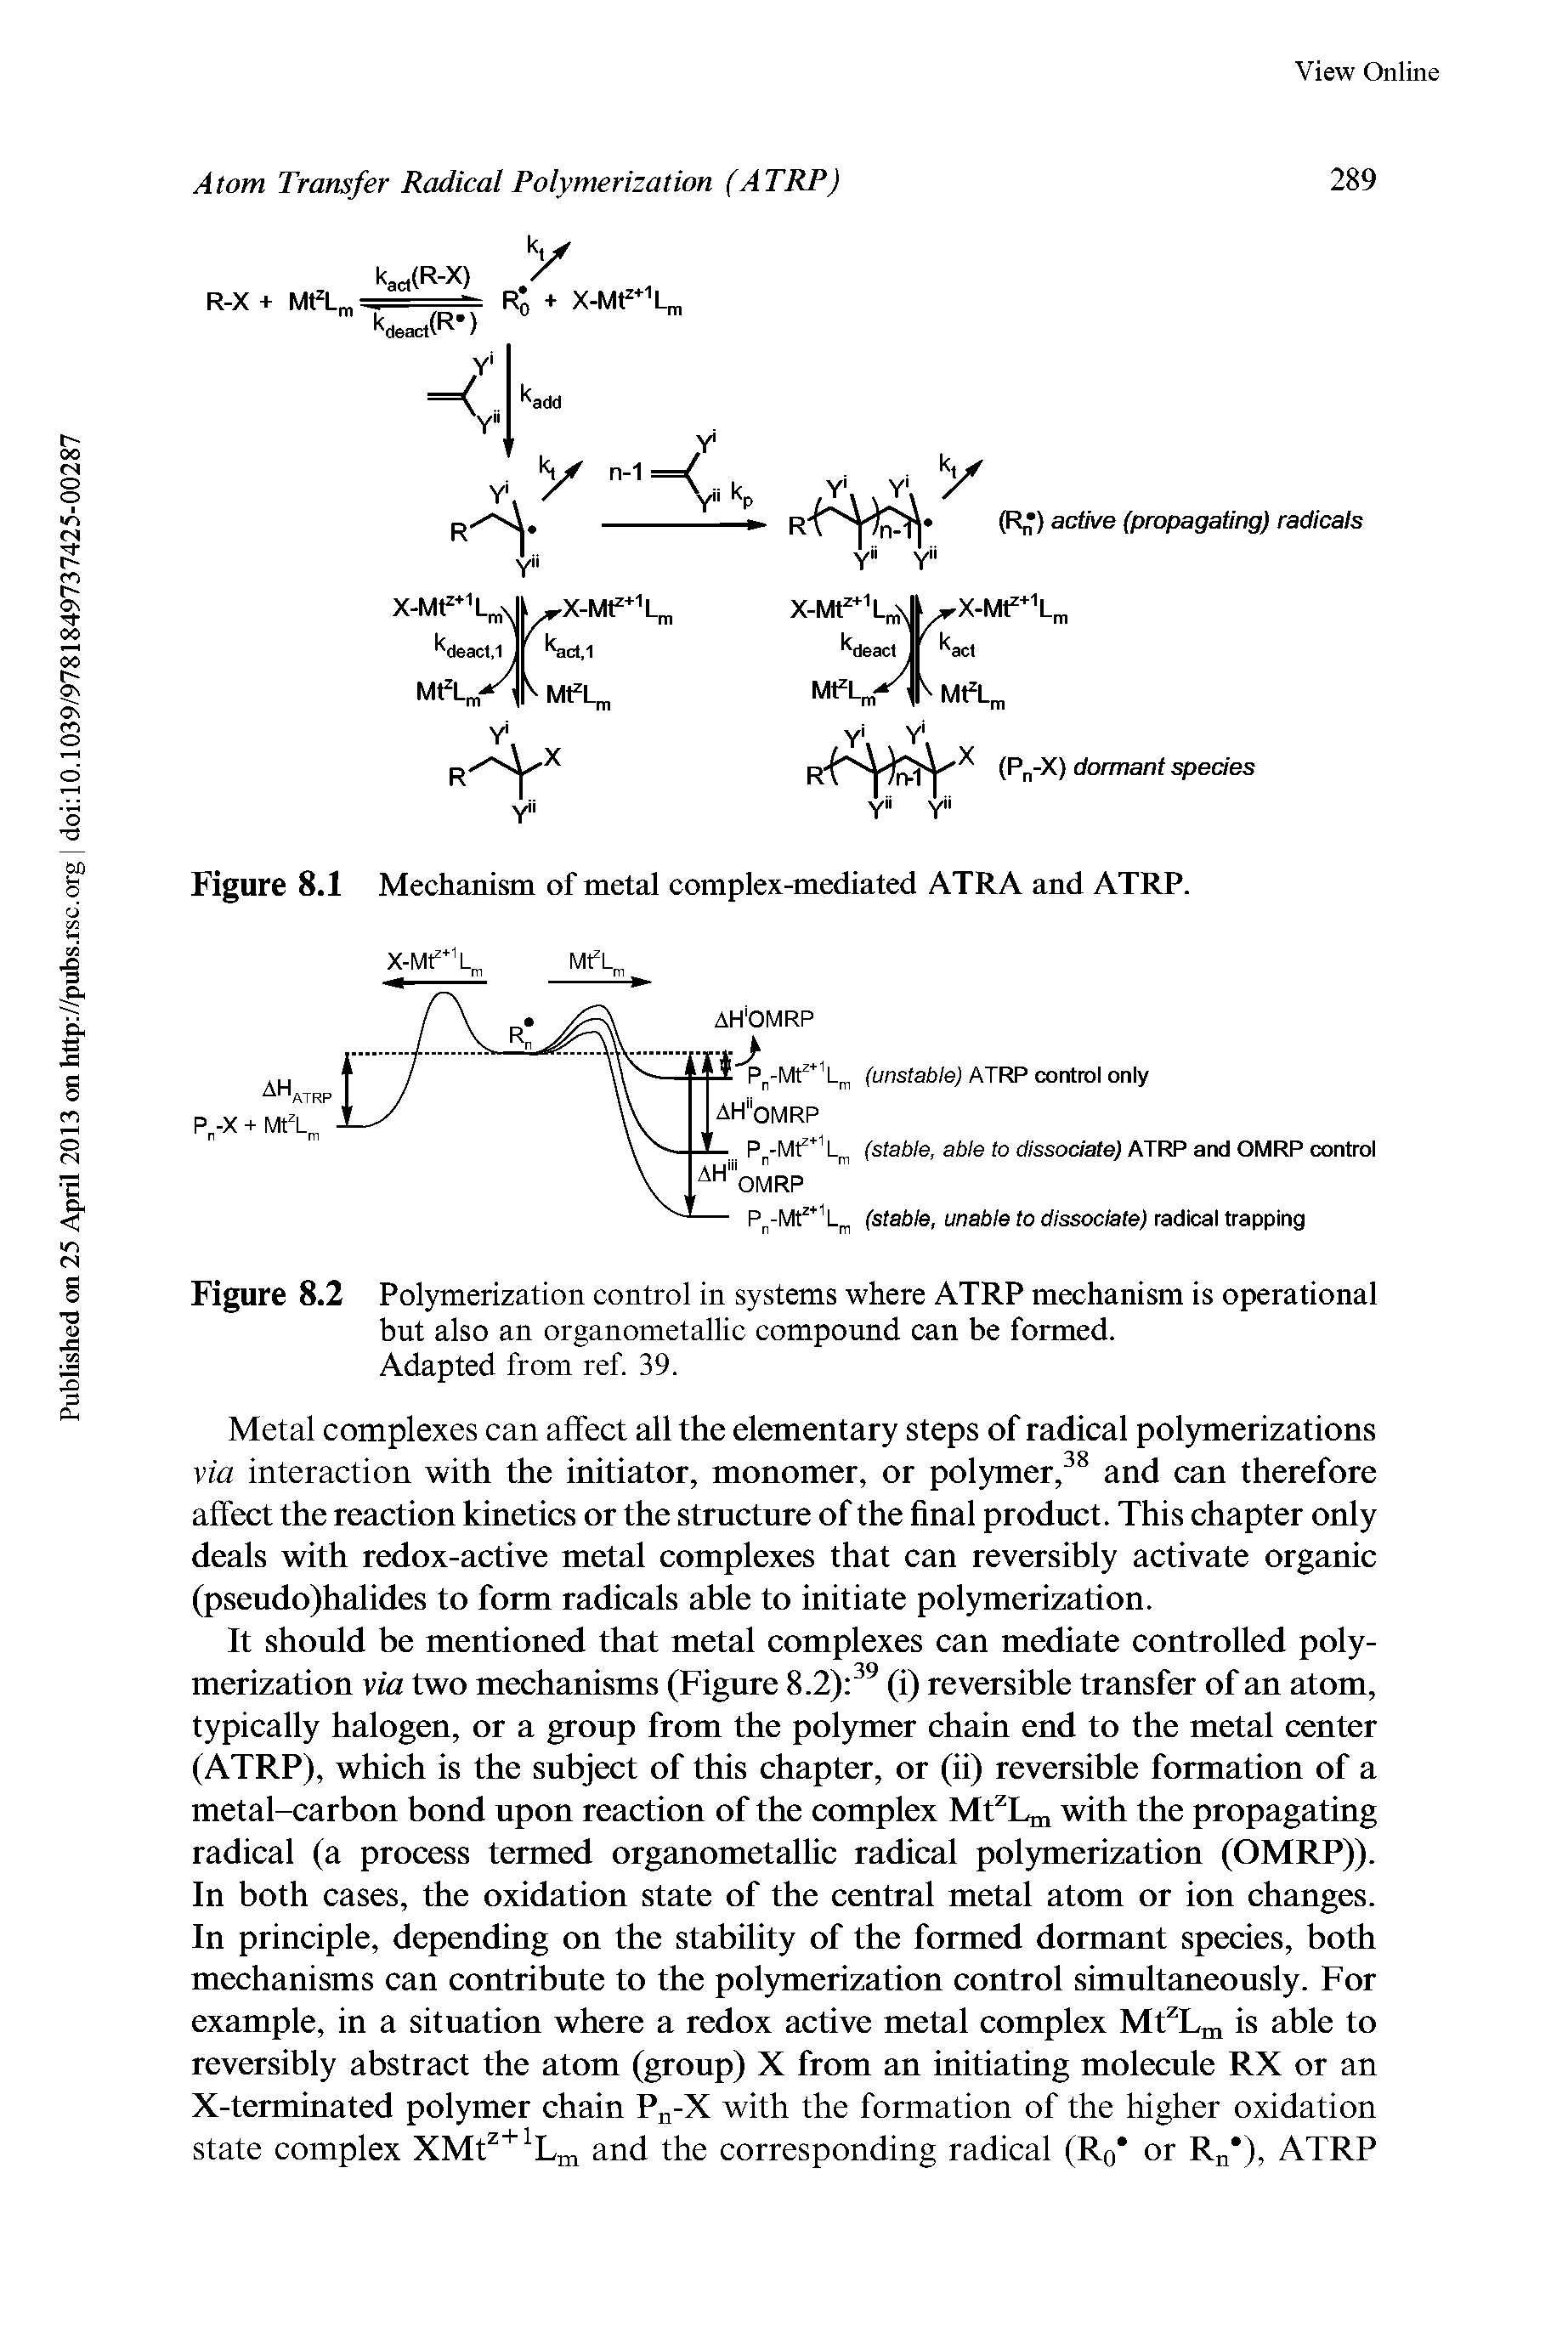 Figure 8.1 Mechanism of metal complex-mediated ATRA and ATRP.